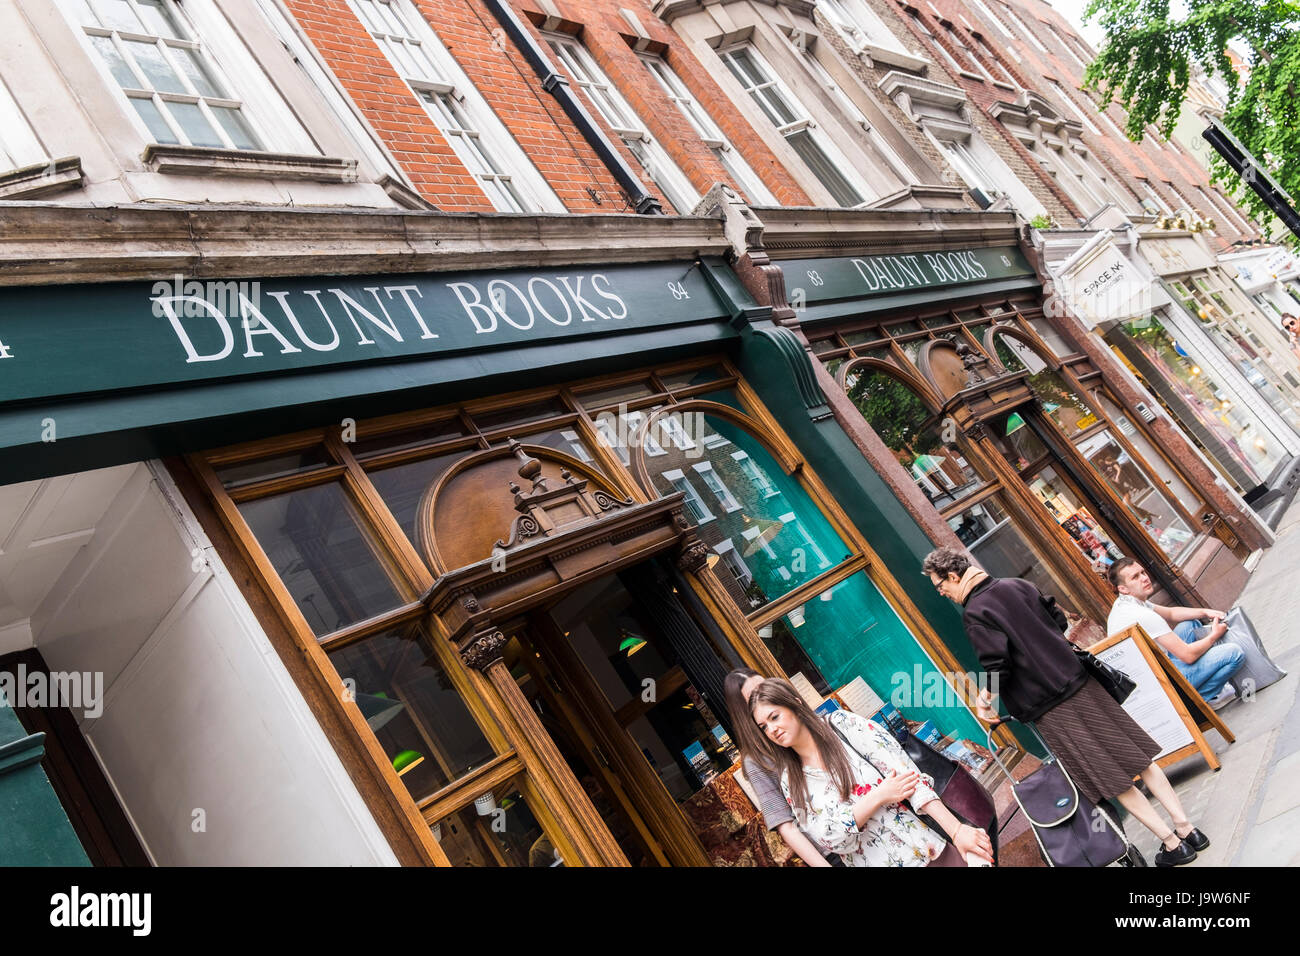 Daunt book shop on Marylebone High Stret, London, England, U.K. Stock Photo